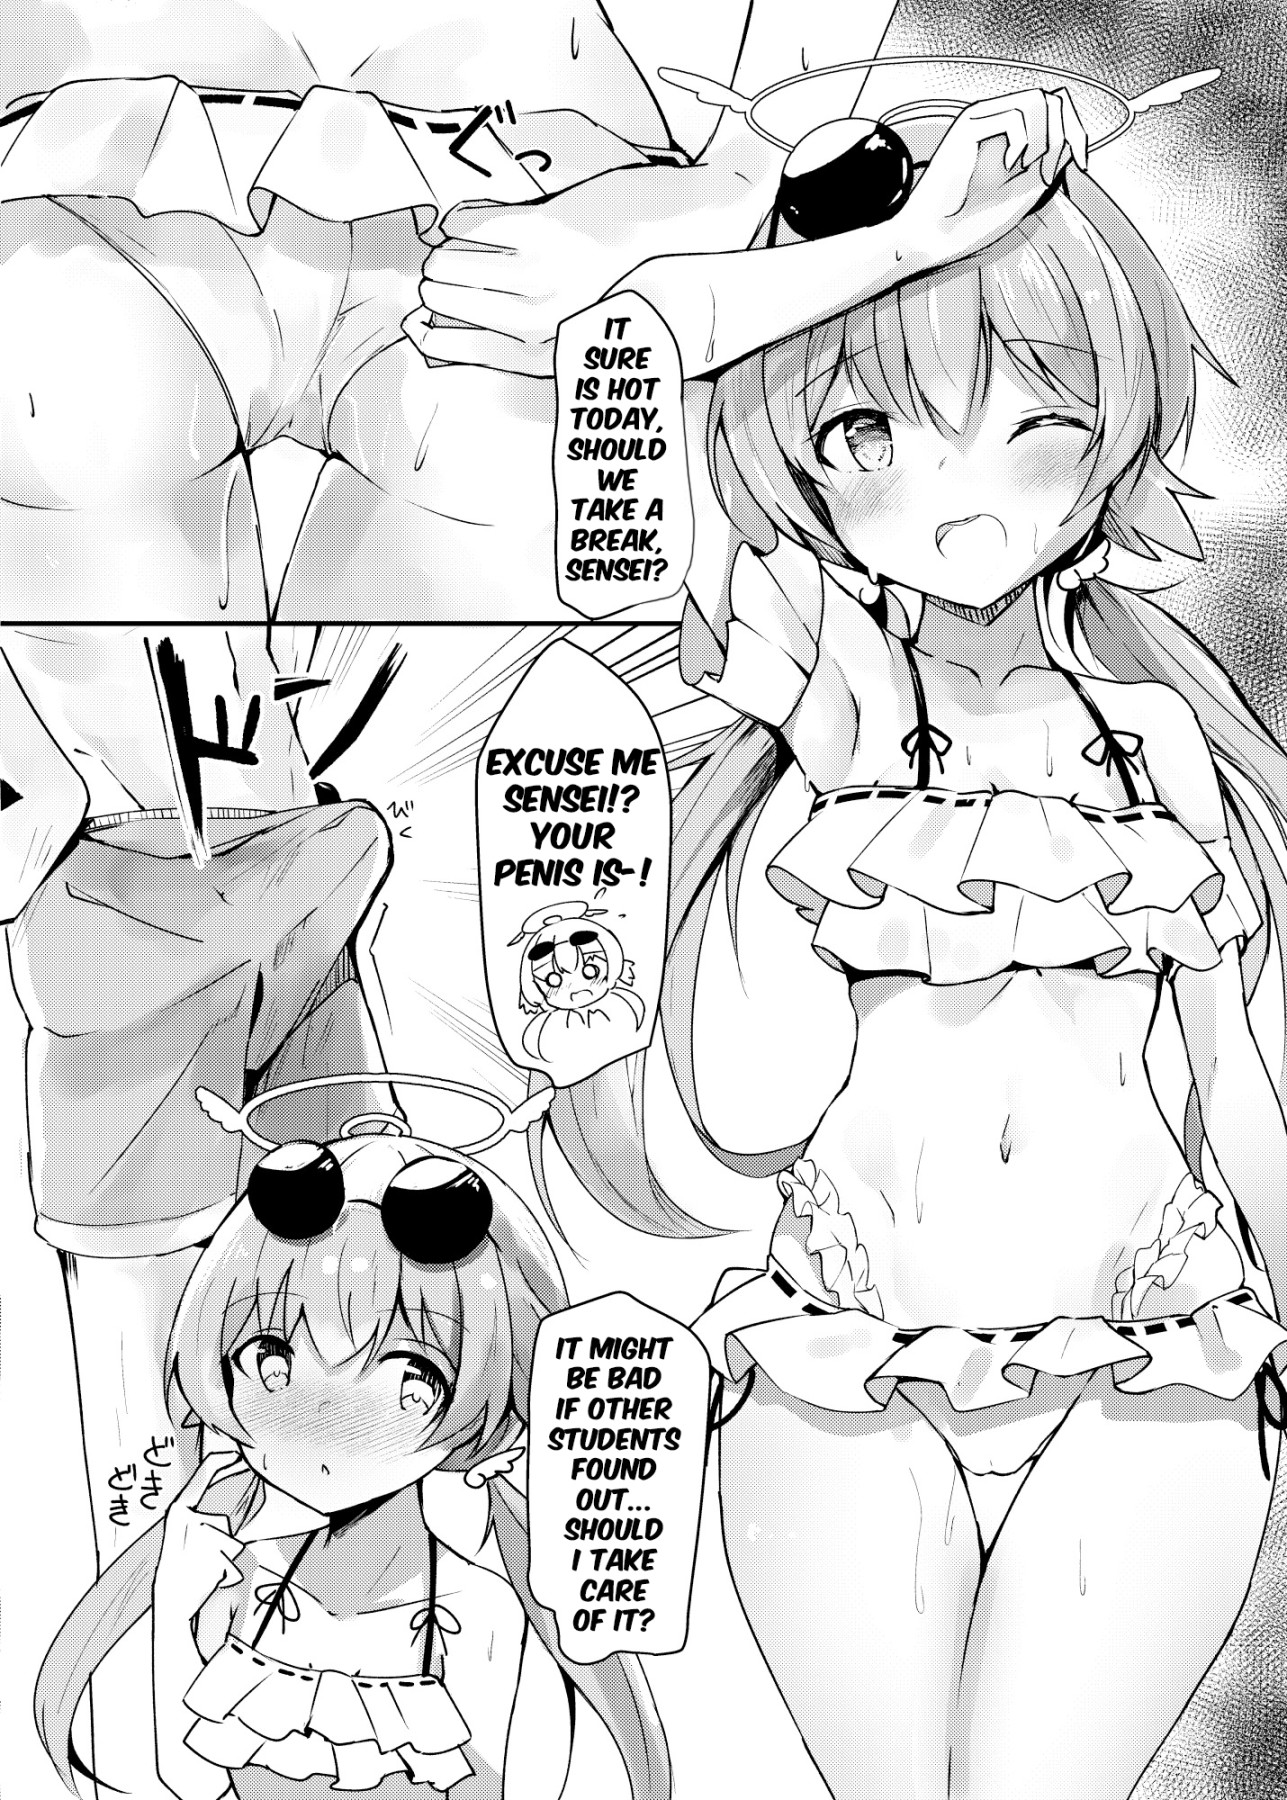 Hentai Manga Comic-Make-Up Work Club Sexual Activity Record-Read-2